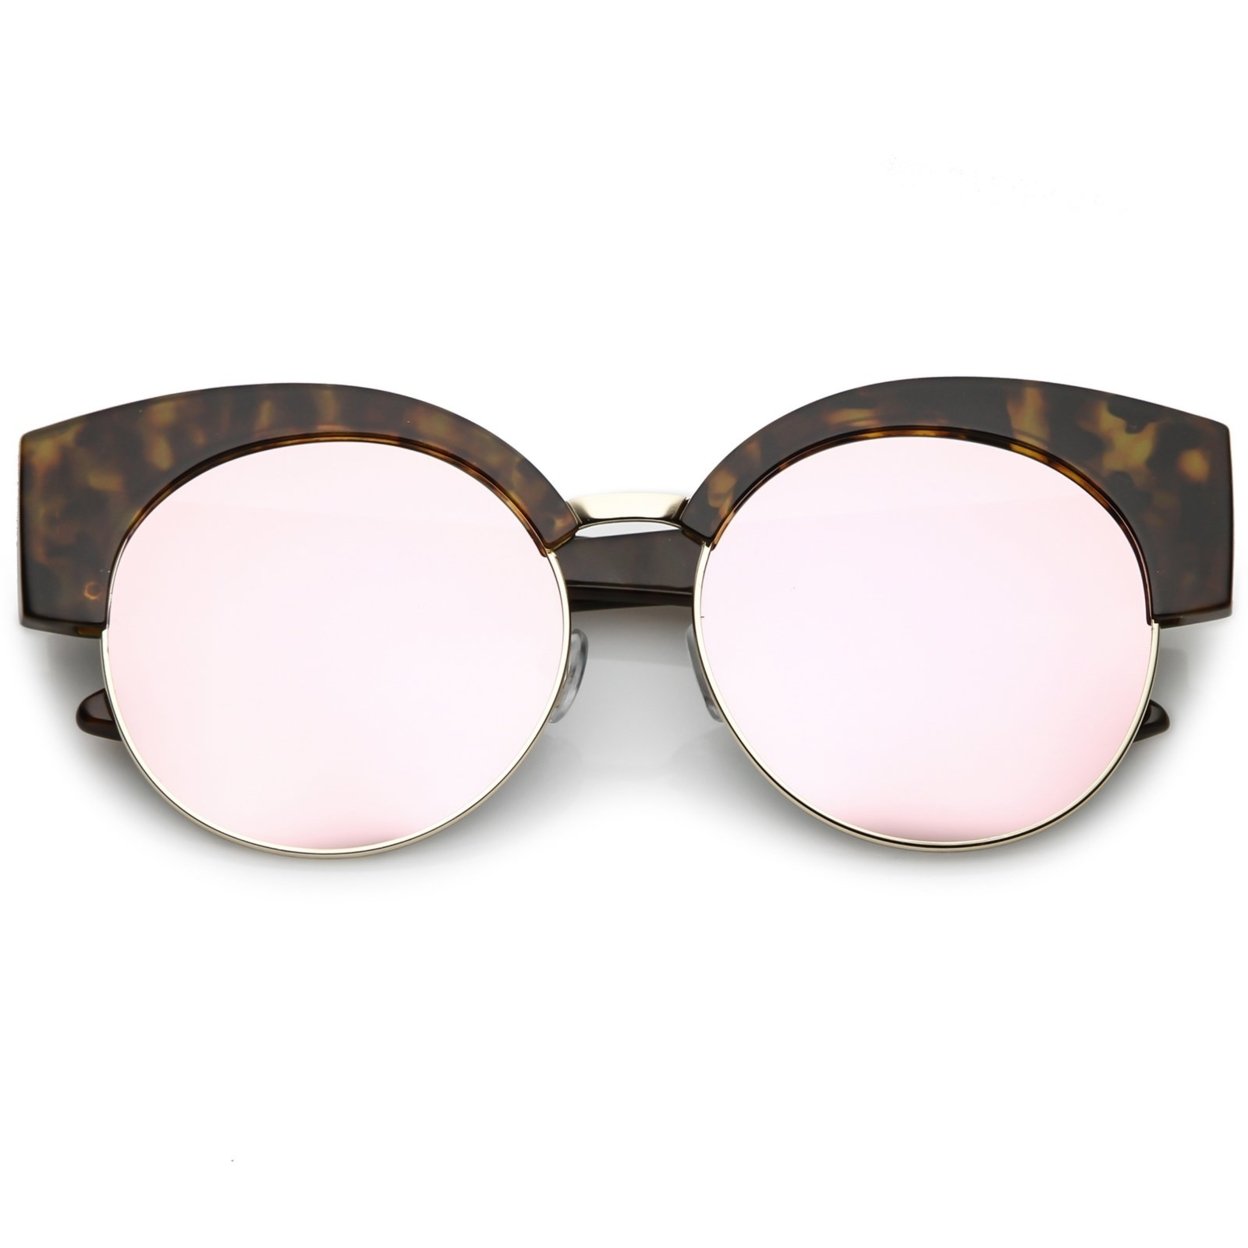 Women's Half Frame Oversize Cat Eye Sunglasses Round Mirrored Flat Lens 59mm - Tortoise Gold / Pink Mirror